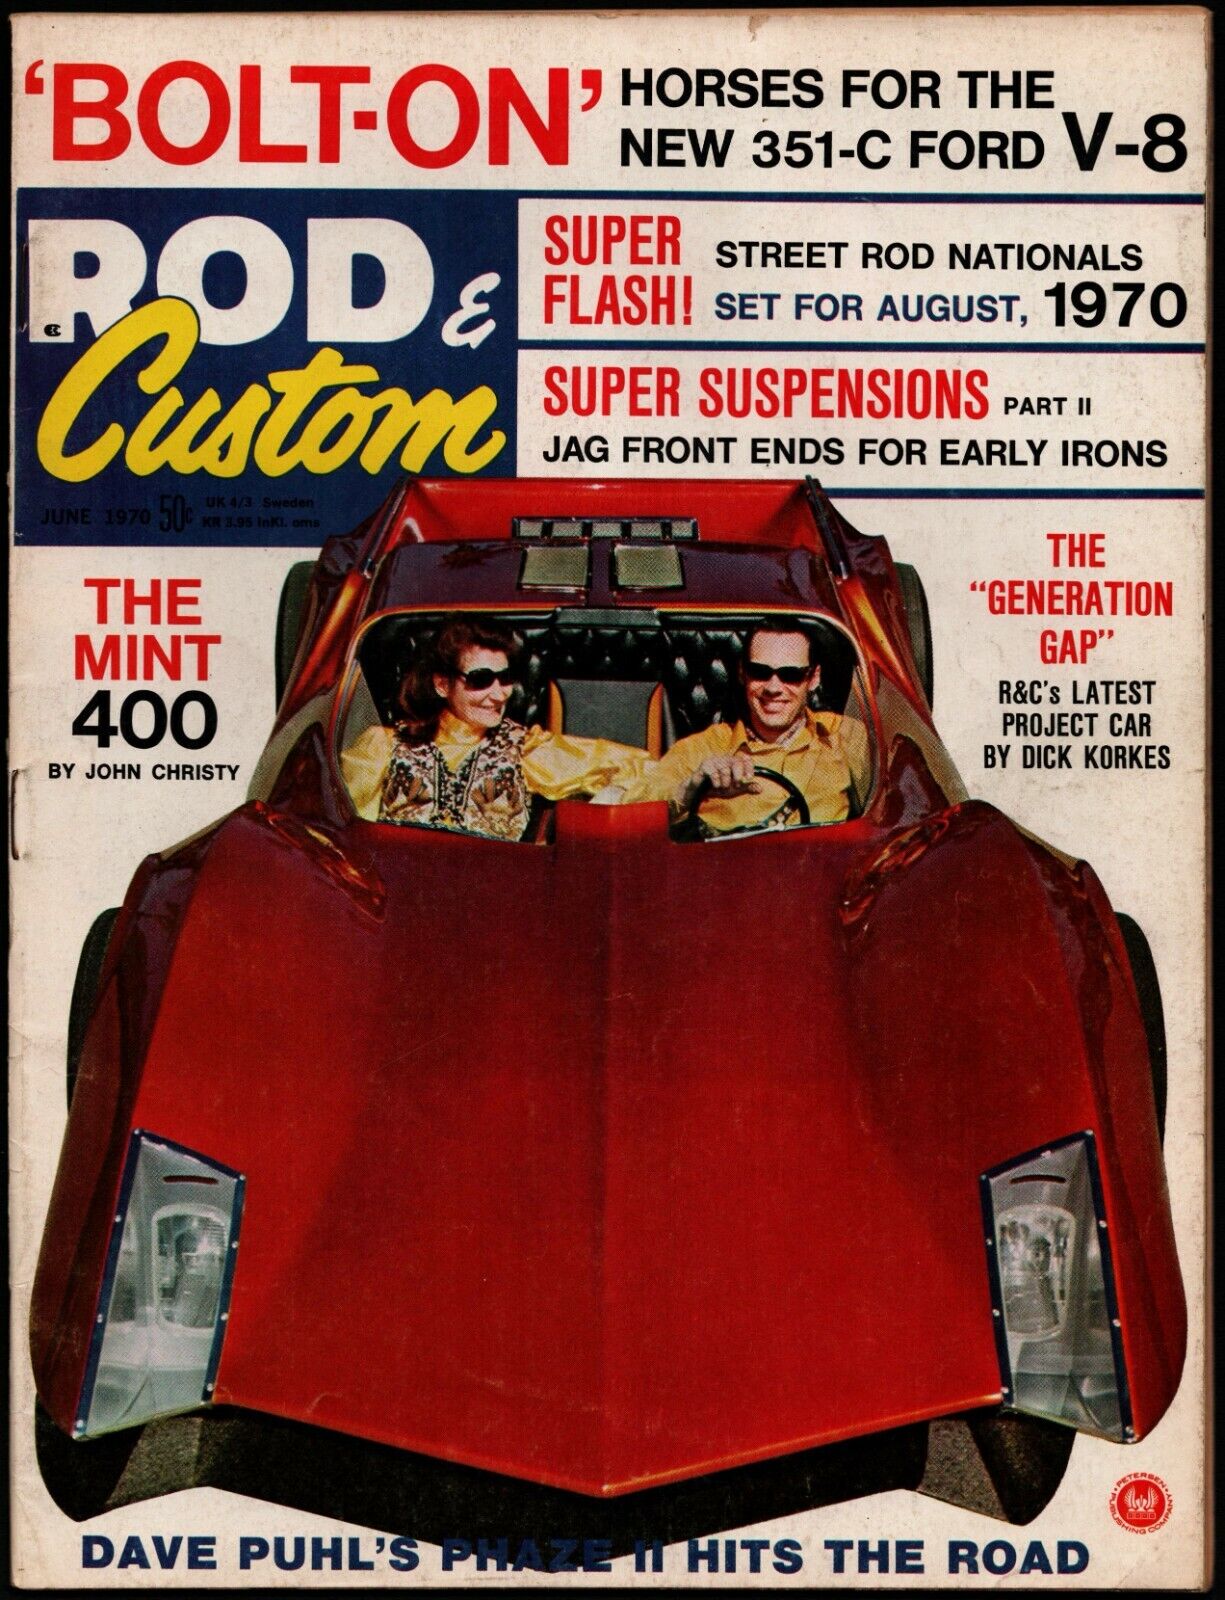 JUNE 1970 ROD & CUSTOM MAGAZINE, THE MINT 400, 351-C FORD, DAVE PUHL PHAZE II